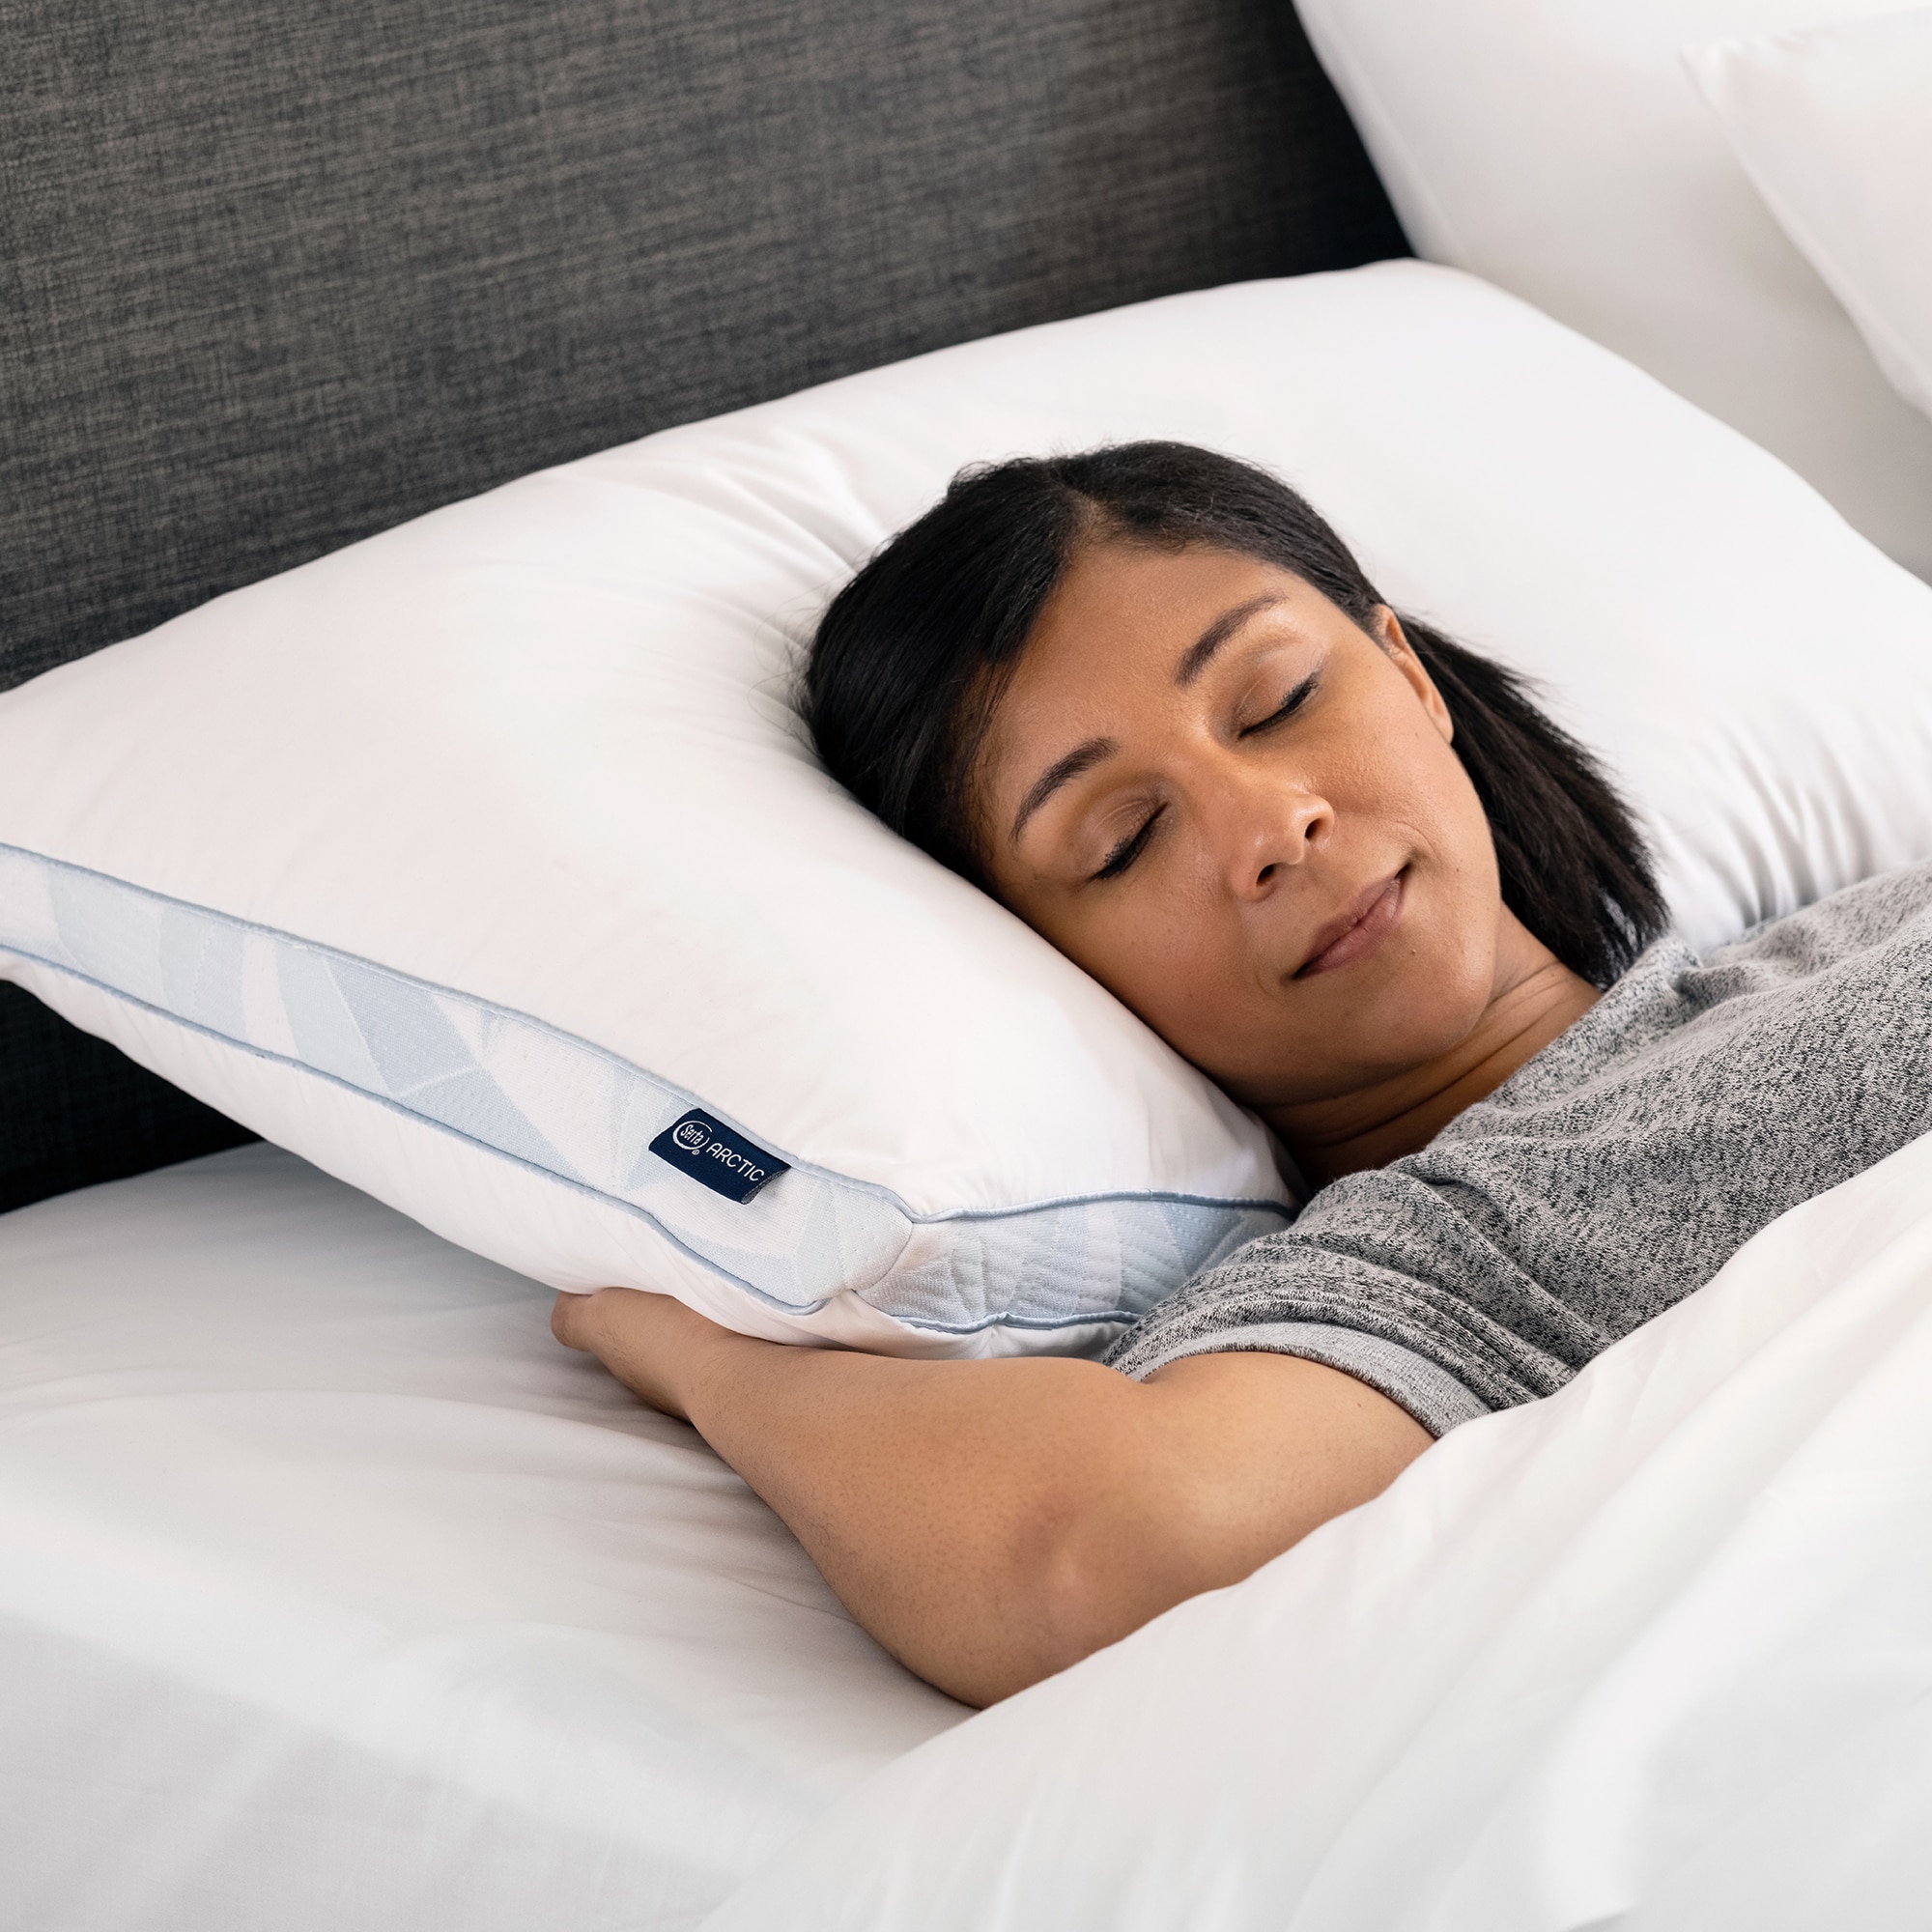 Serta Arctic Cooling Memory Foam Pillow – Sleep Masters